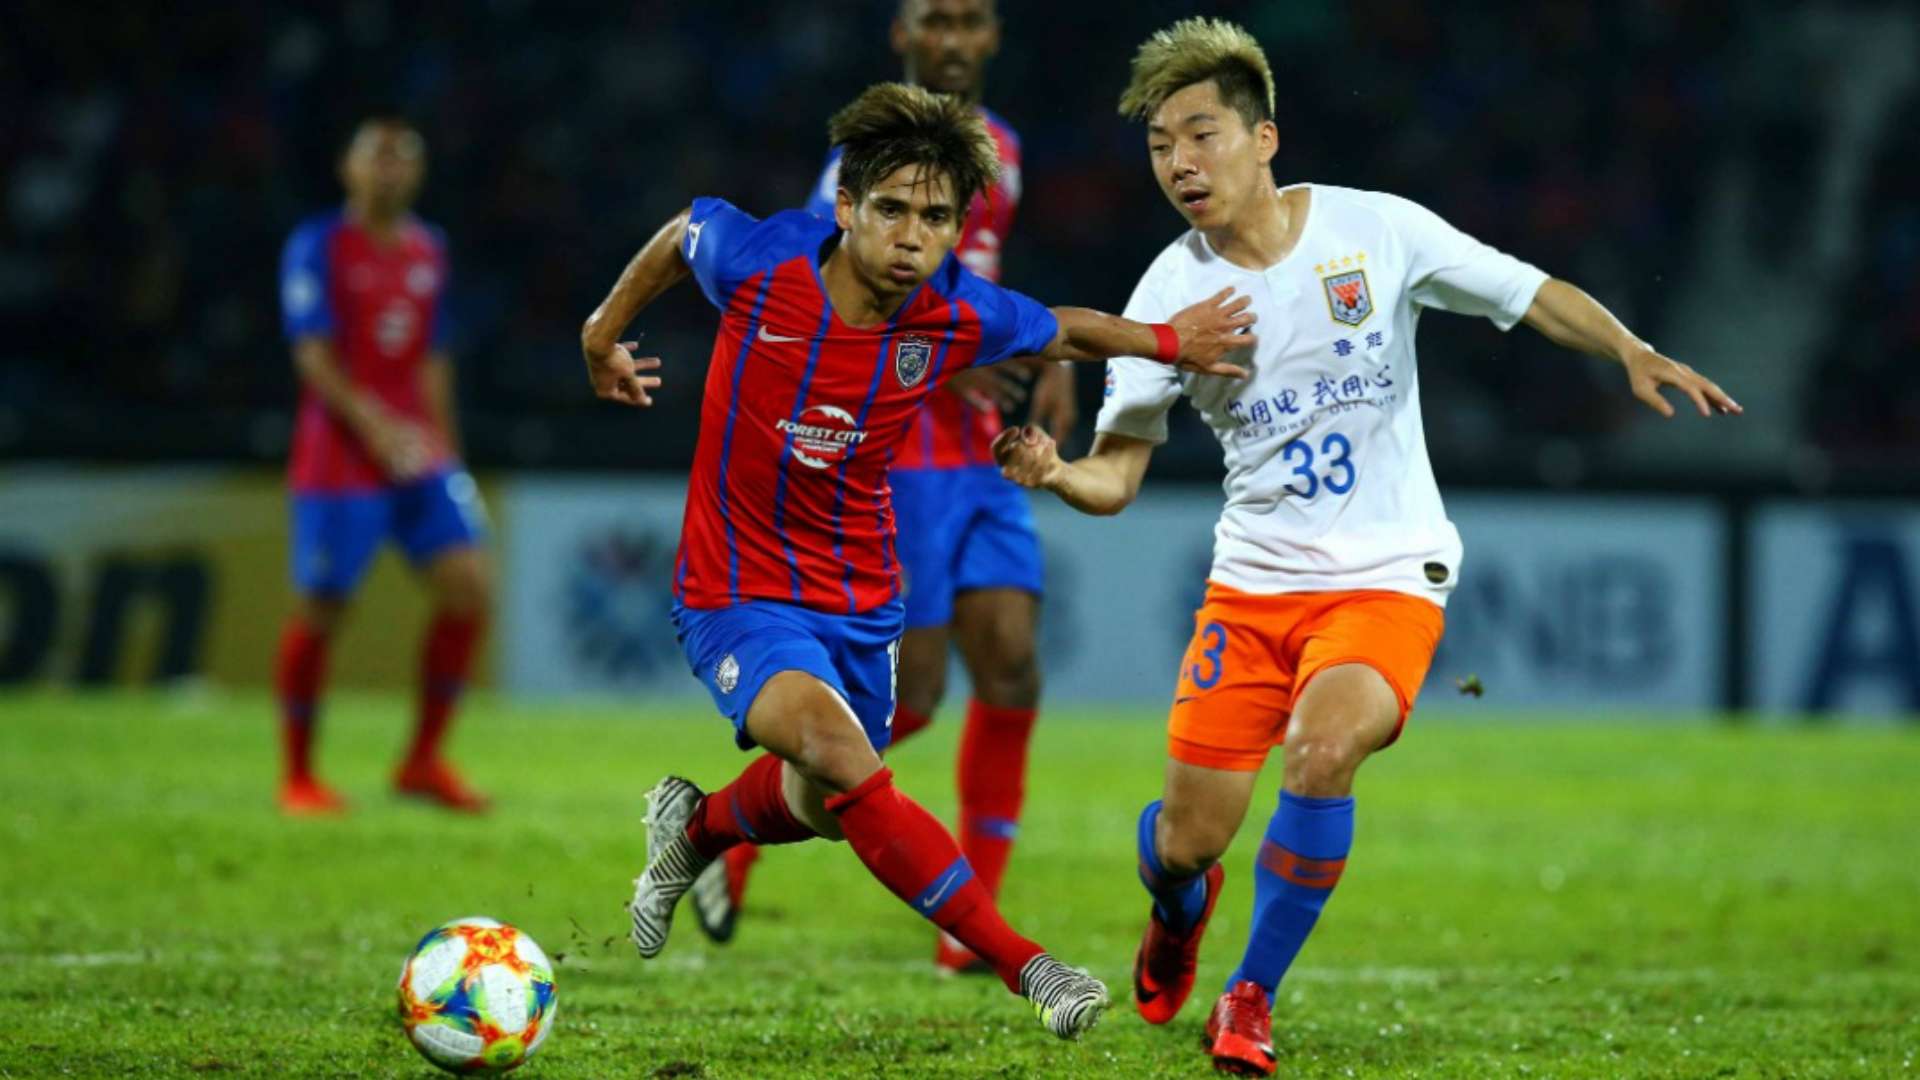 Akhyar Rashid, Johor Darul Ta'zim v Shandong Luneng, AFC Champions League, 24 Apr 2019